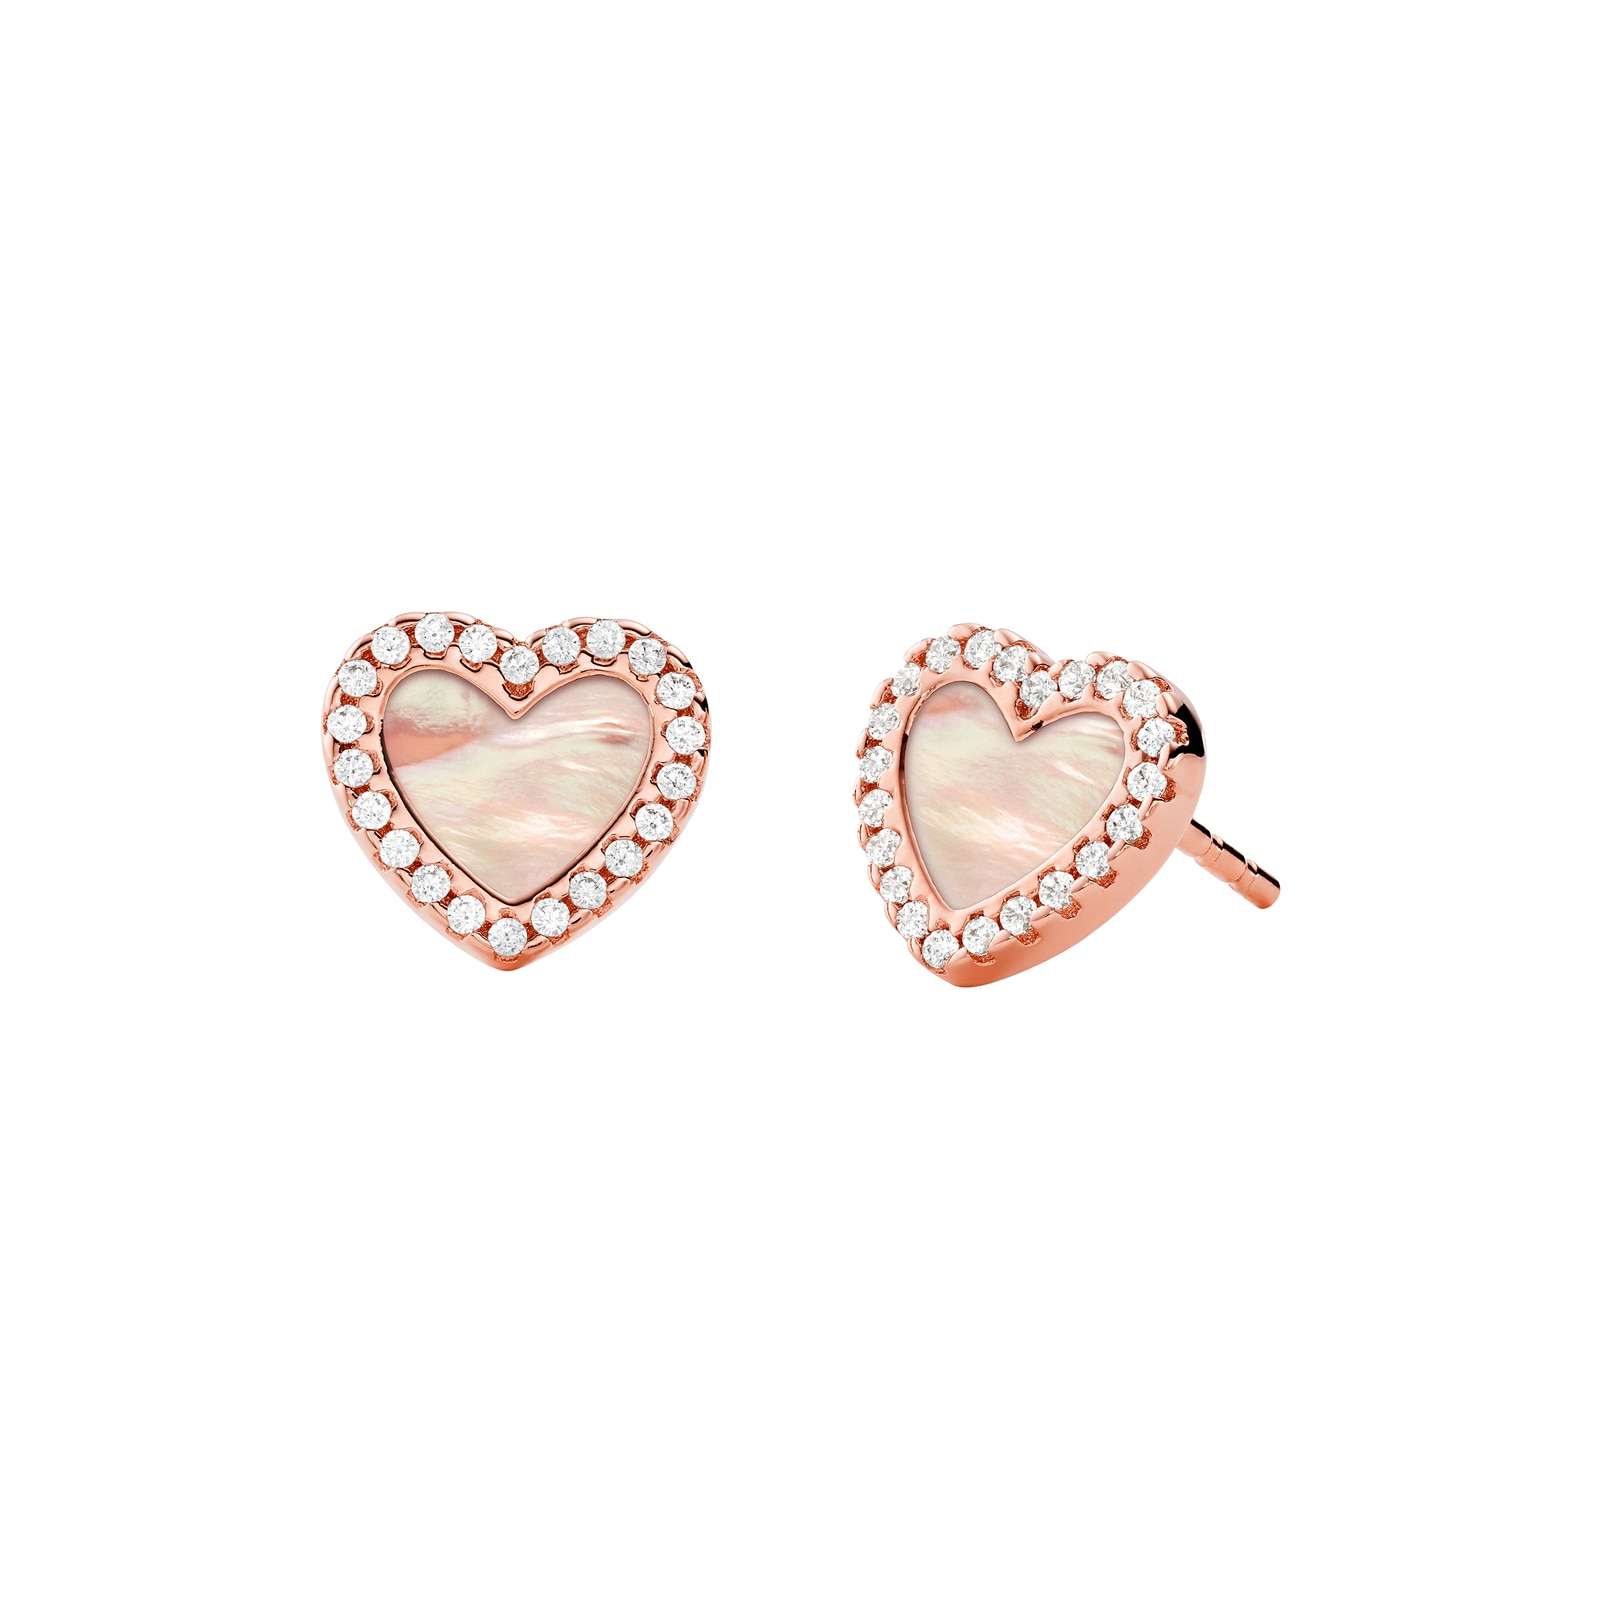 Michael Kors Rose Gold Heart Earrings Clearance, 50% OFF 